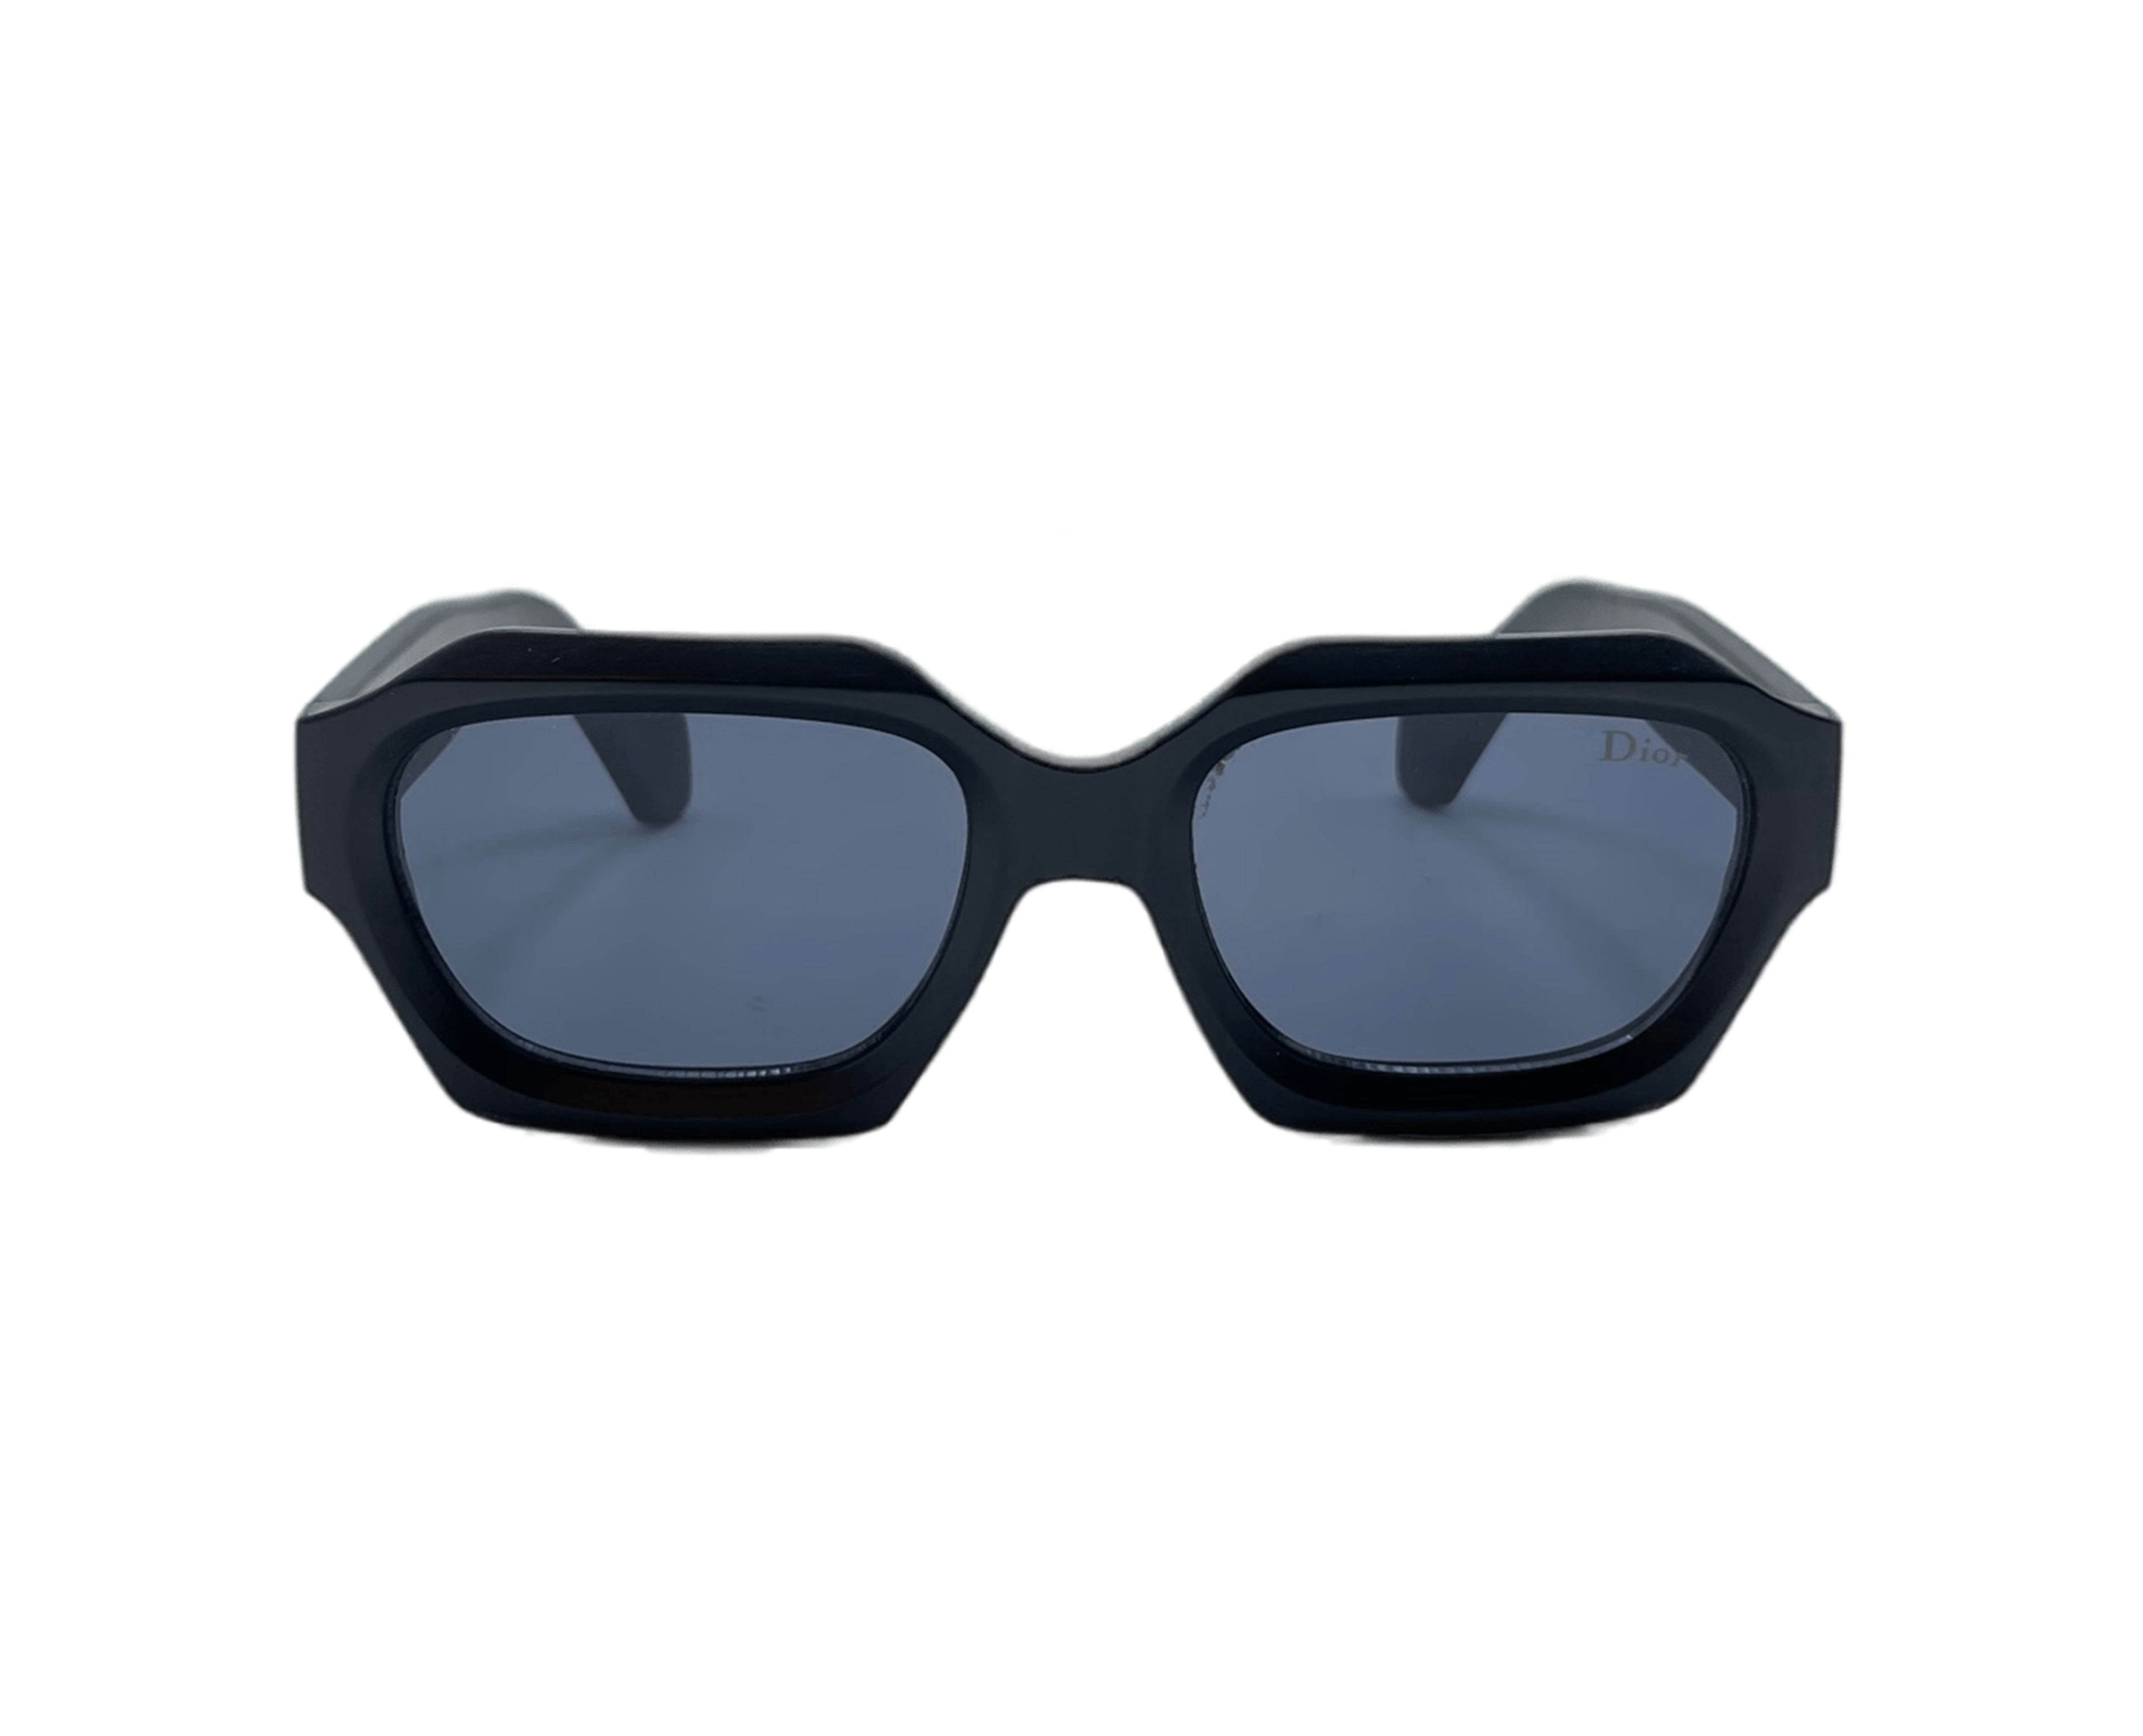 NS Deluxe - 3658 - Black - Sunglasses